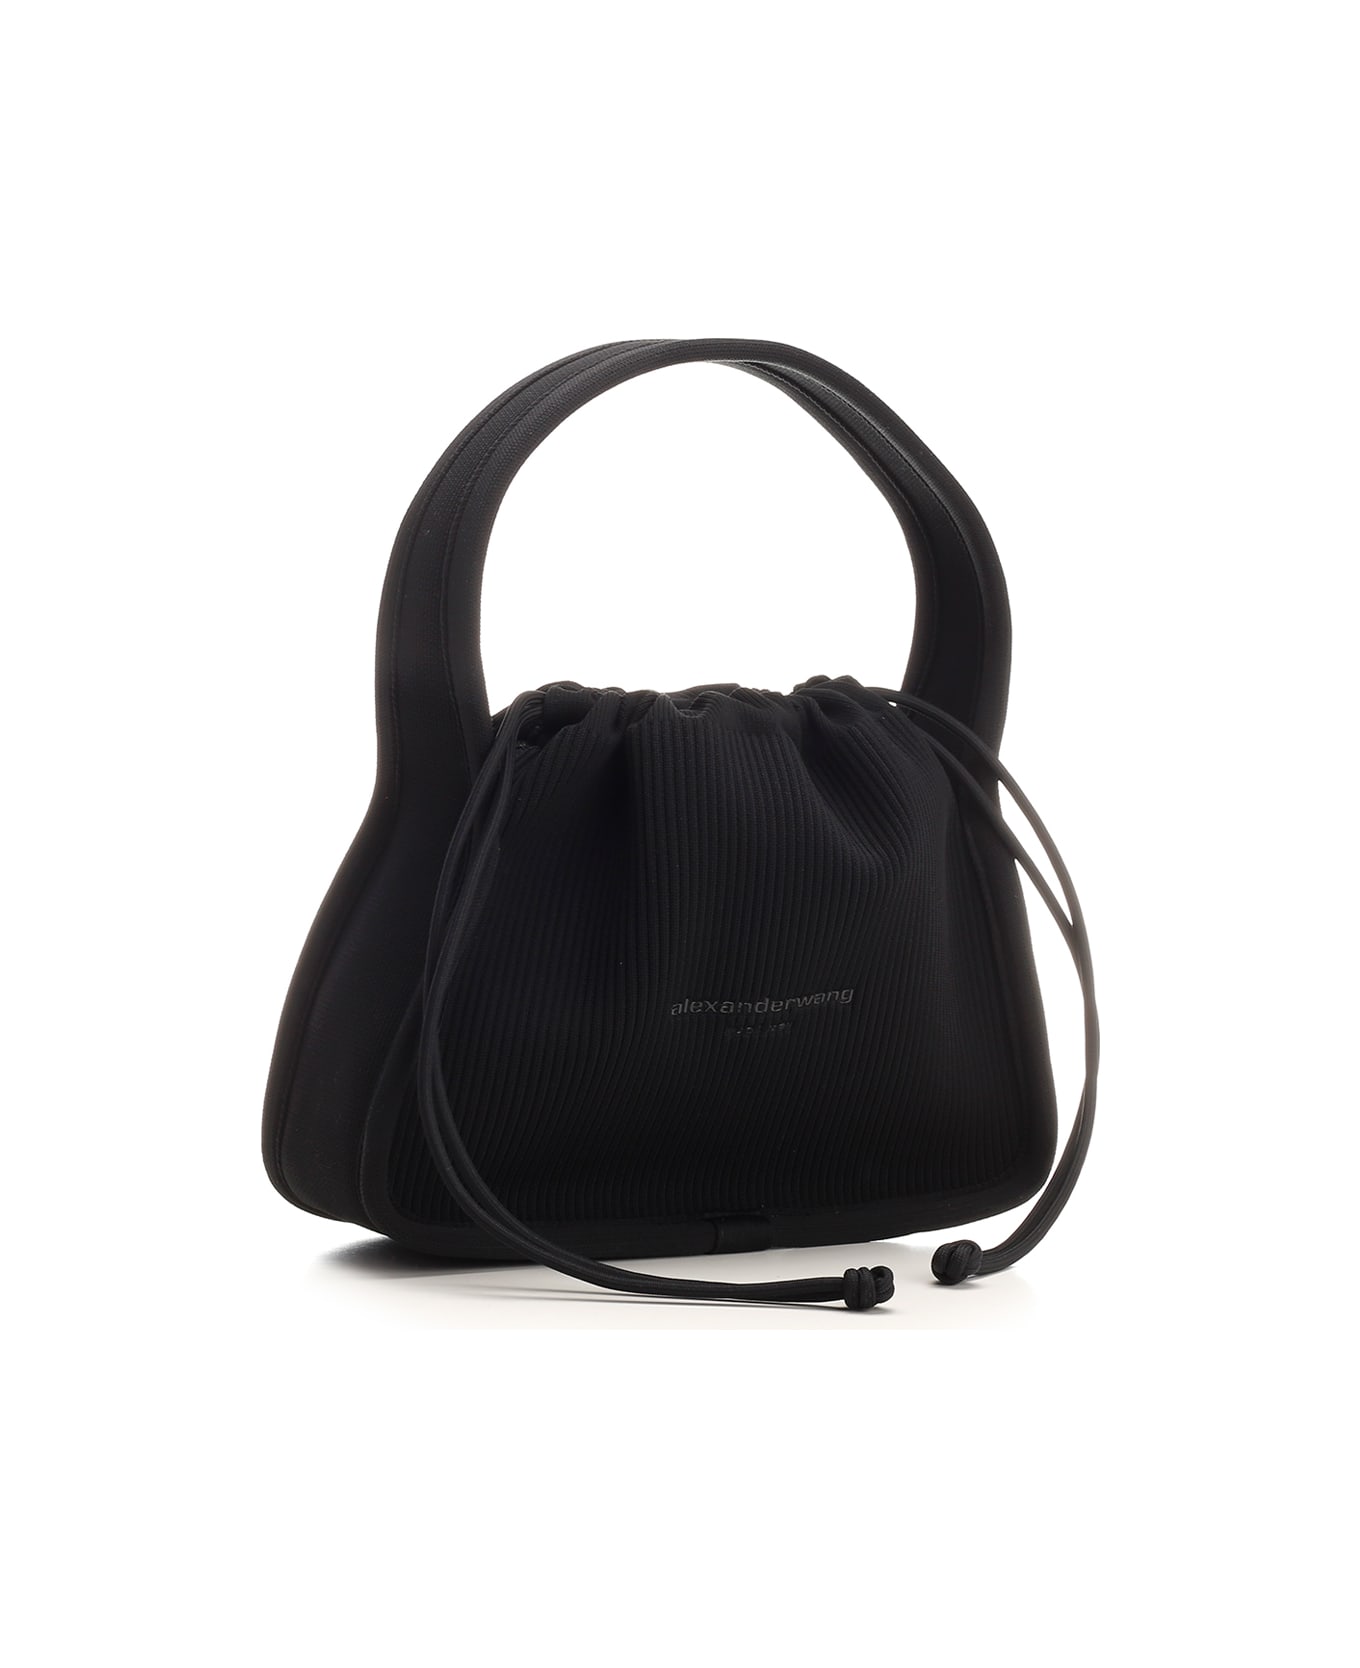 Alexander Wang 'ryan' Small Handbag - Black